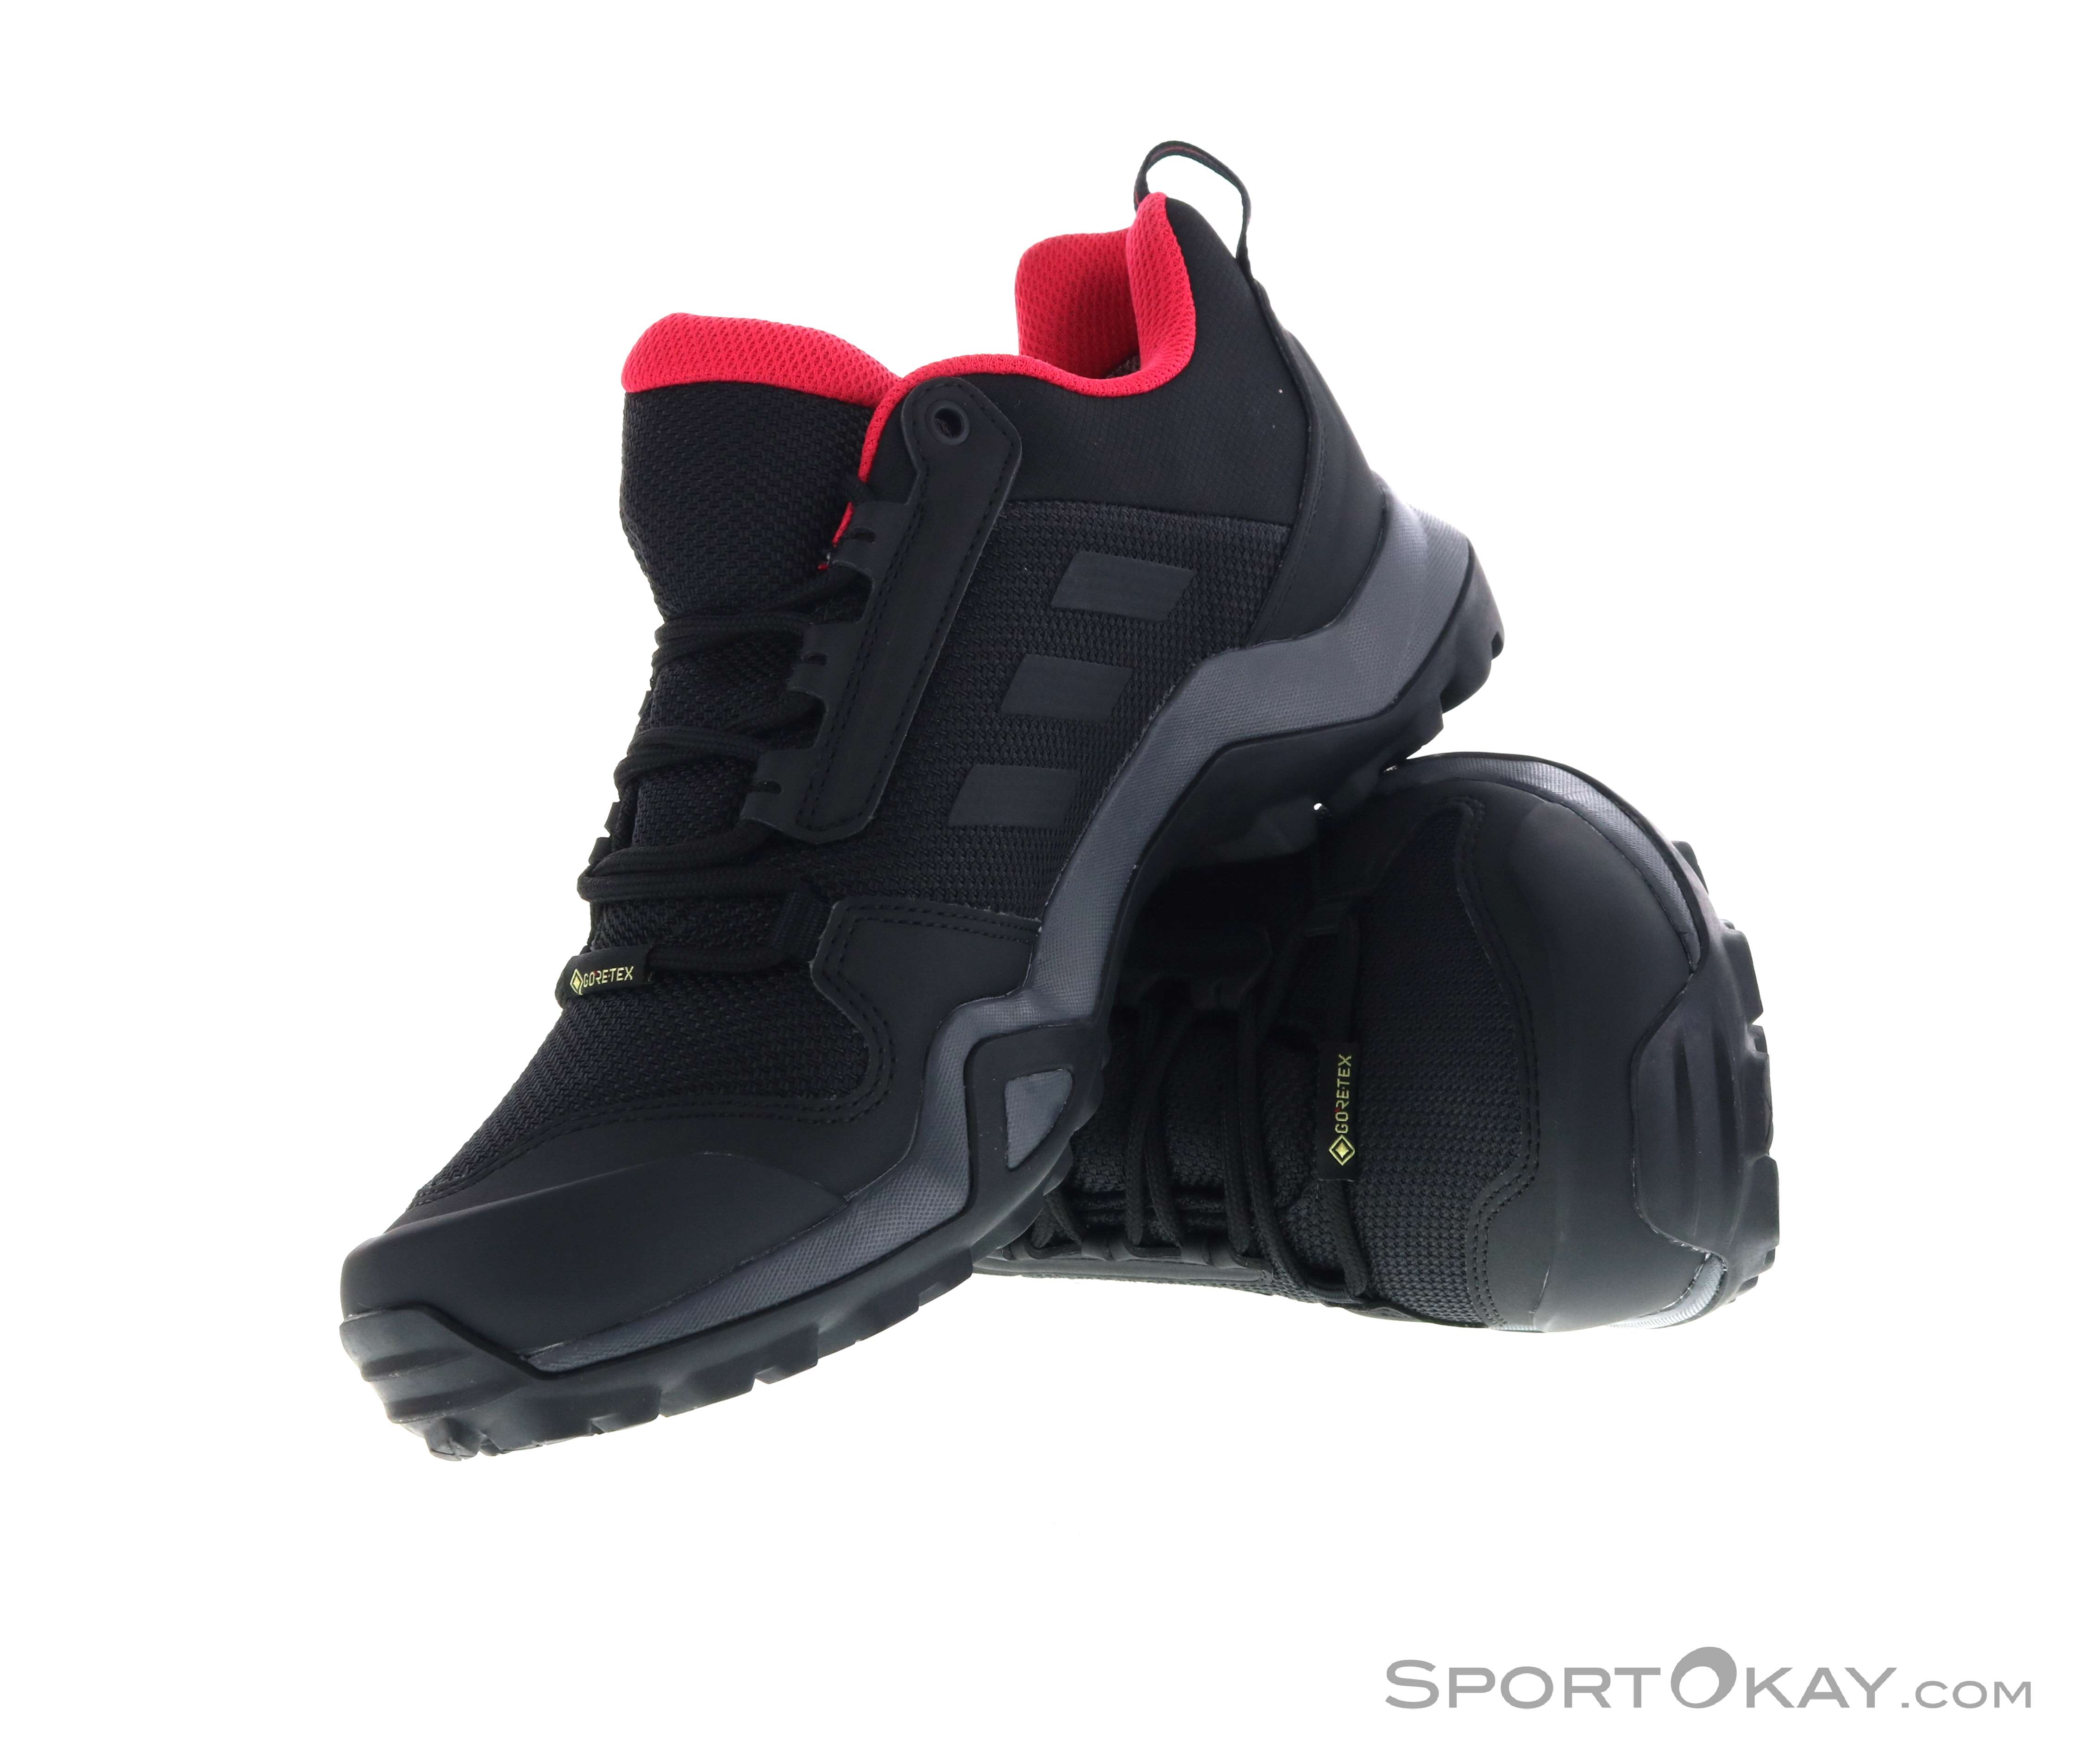 adidas women's hiking shoes gore tex